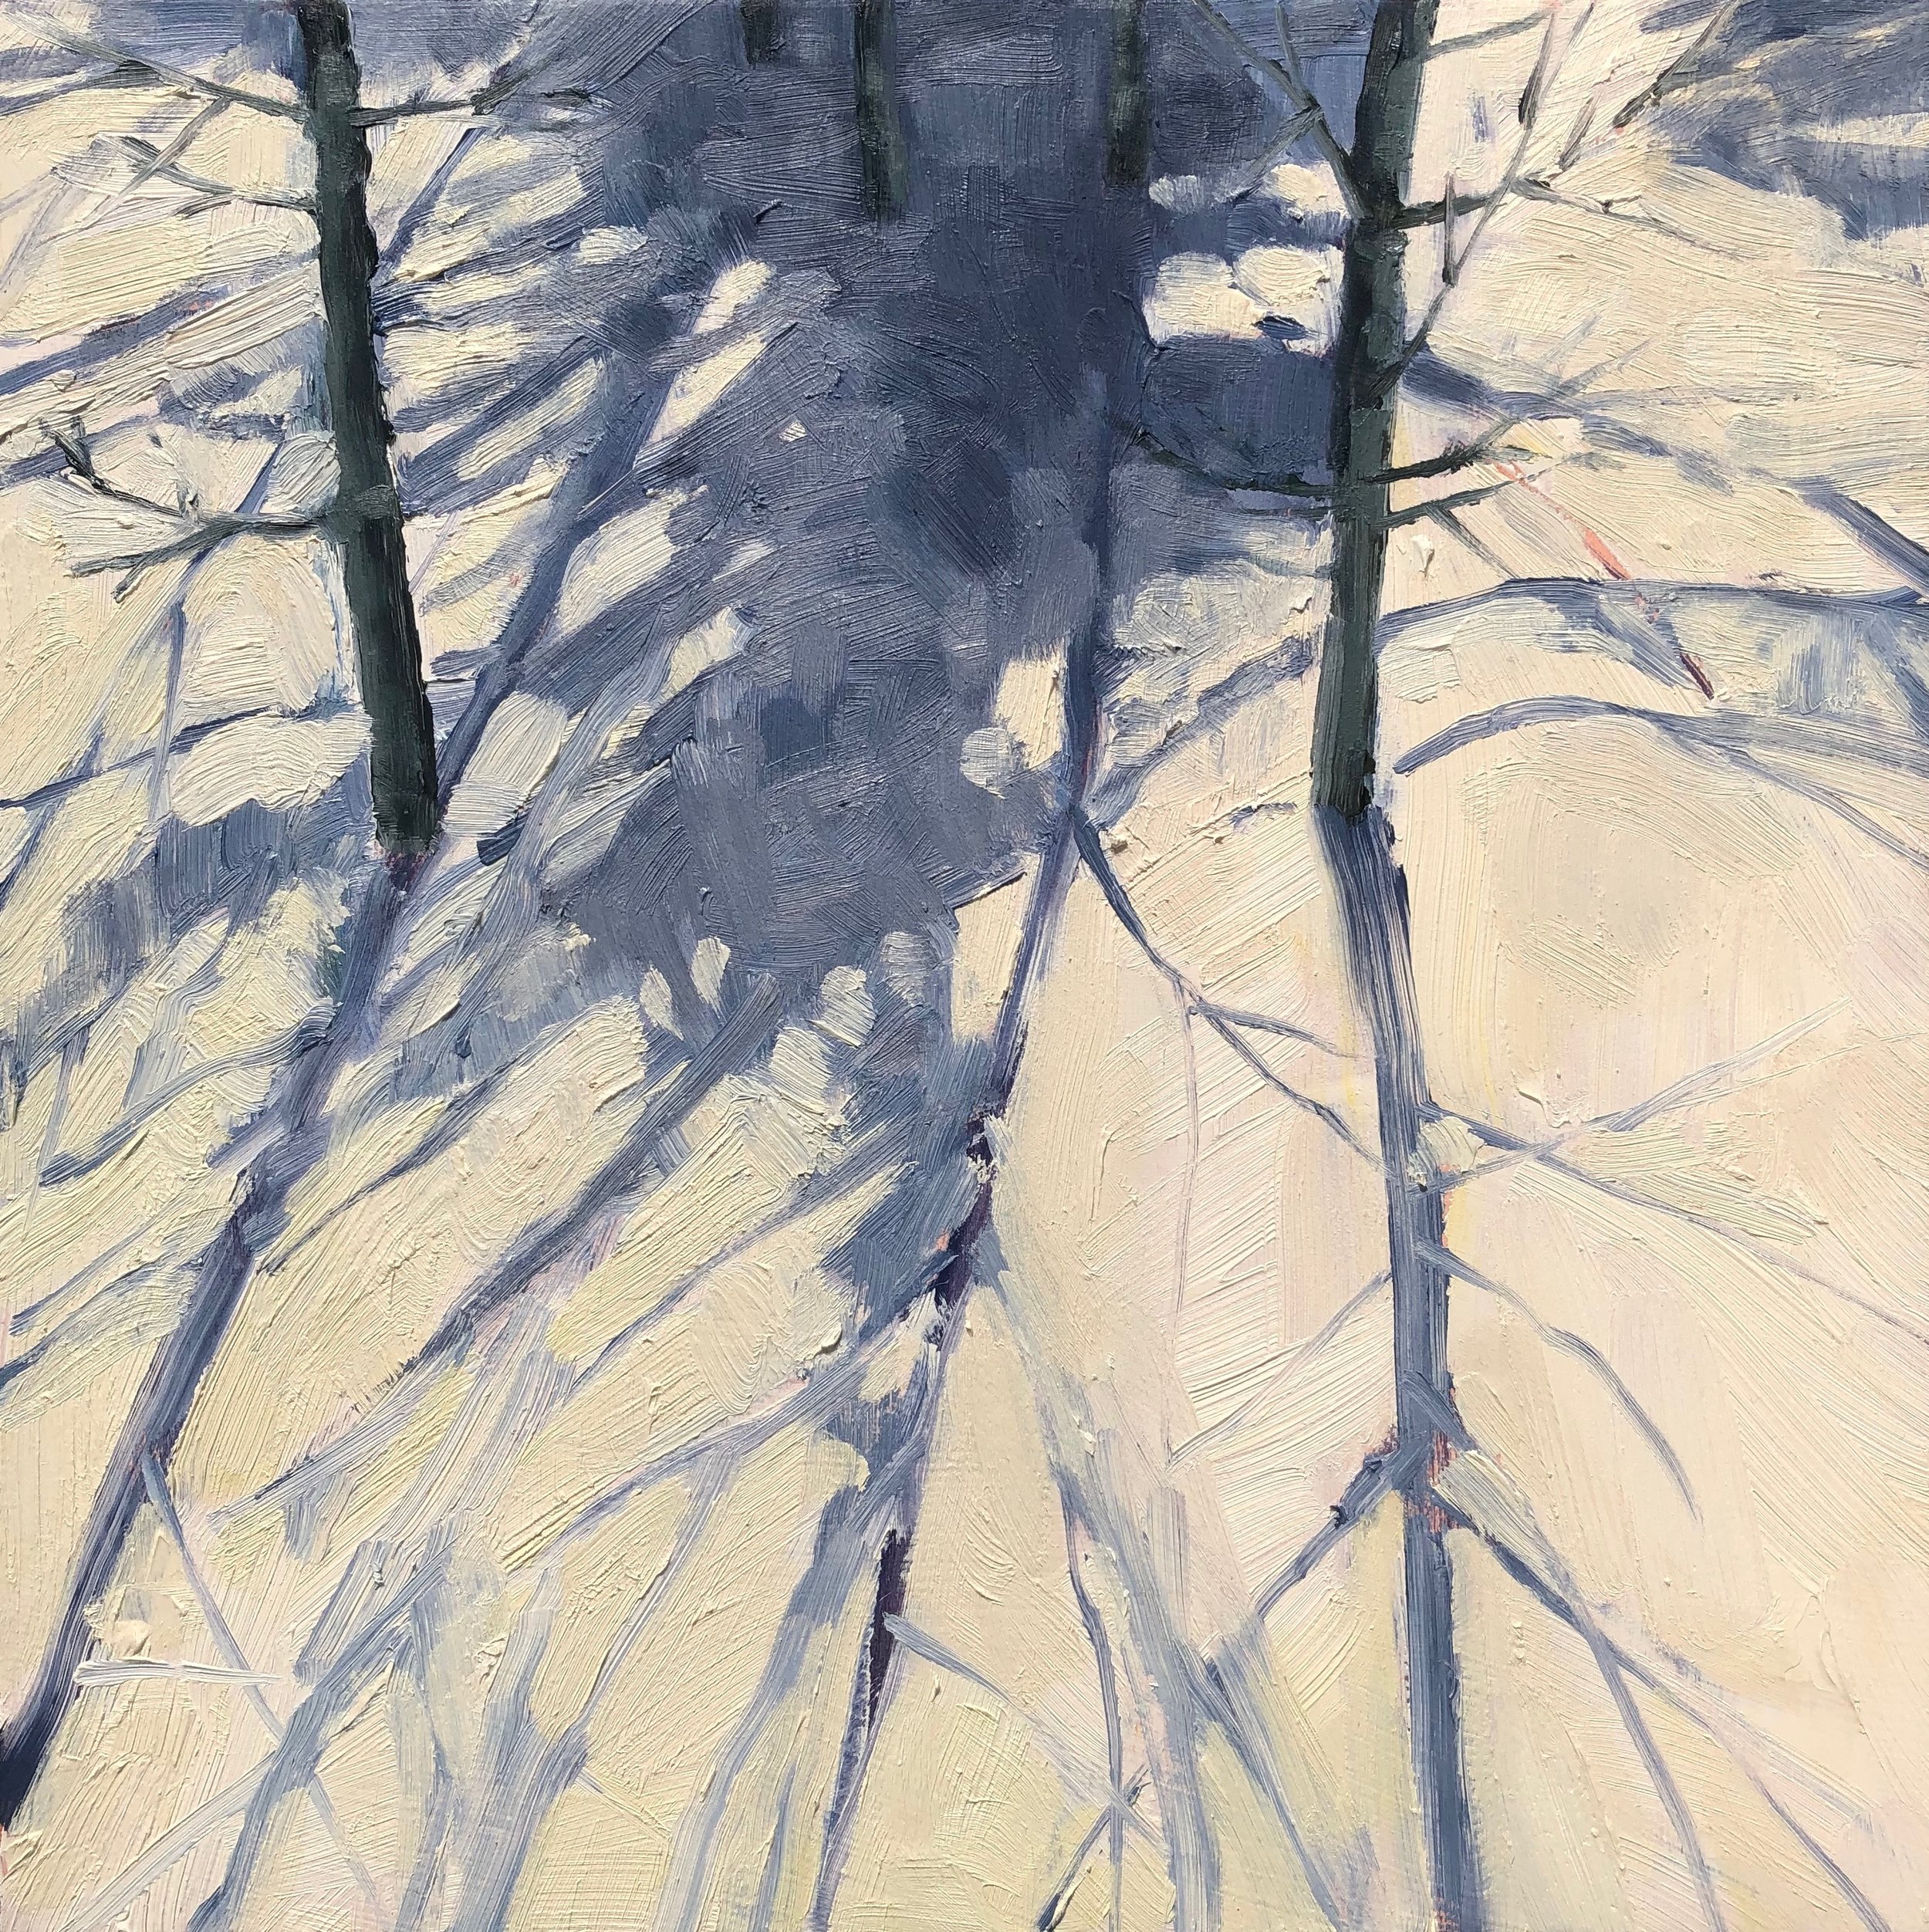  Winter Light. 10x10” oil on birch panel ©N Strasburg 